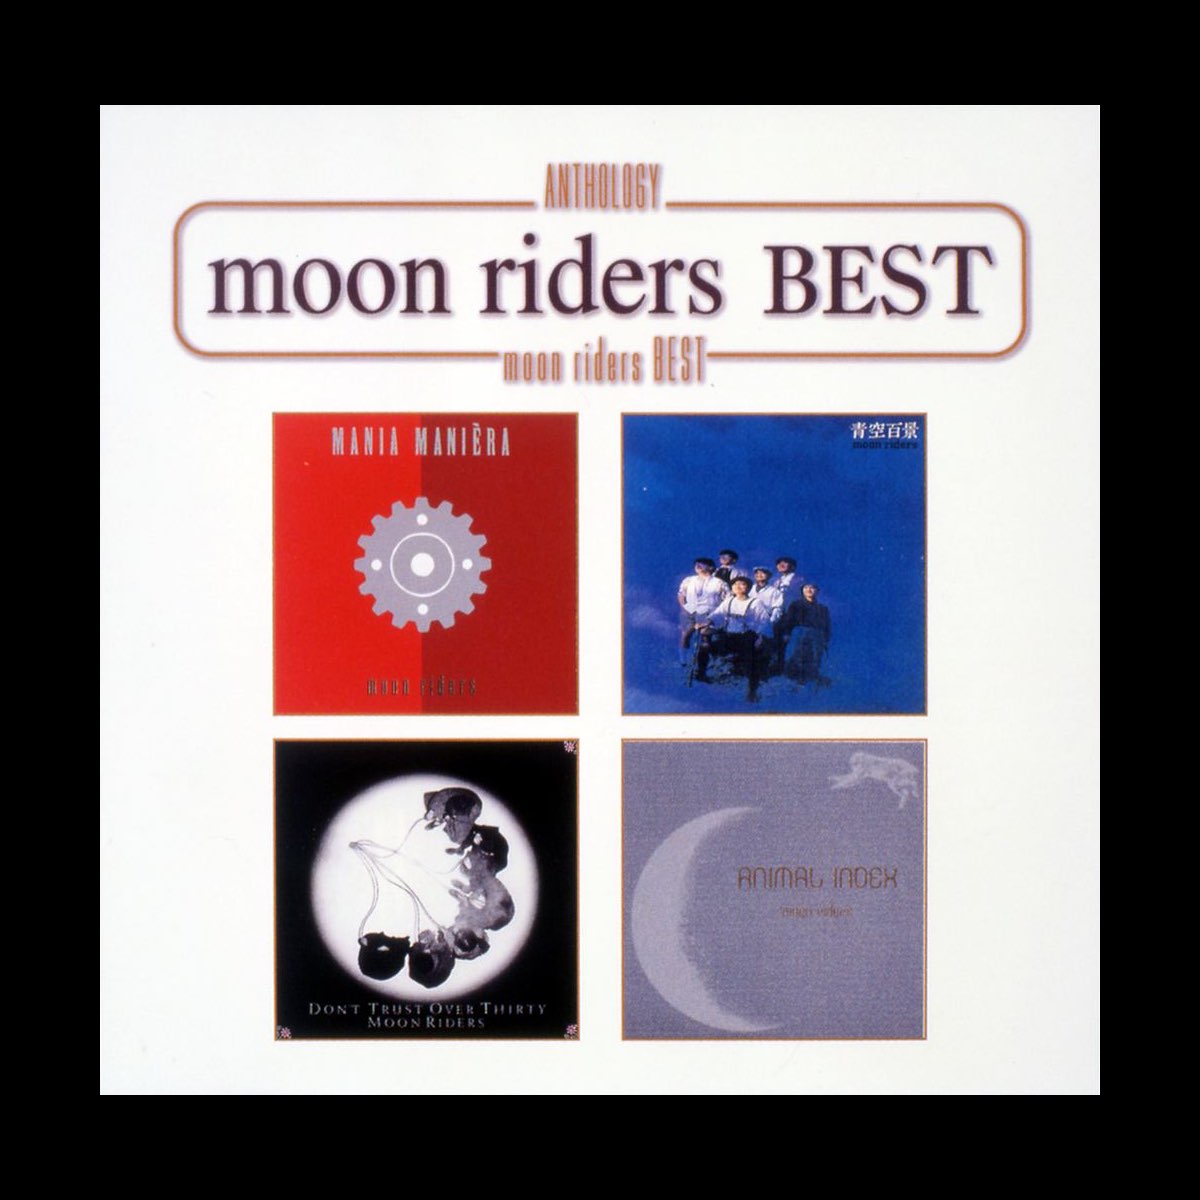 Anthology moon riders BEST de Moonriders en Apple Music